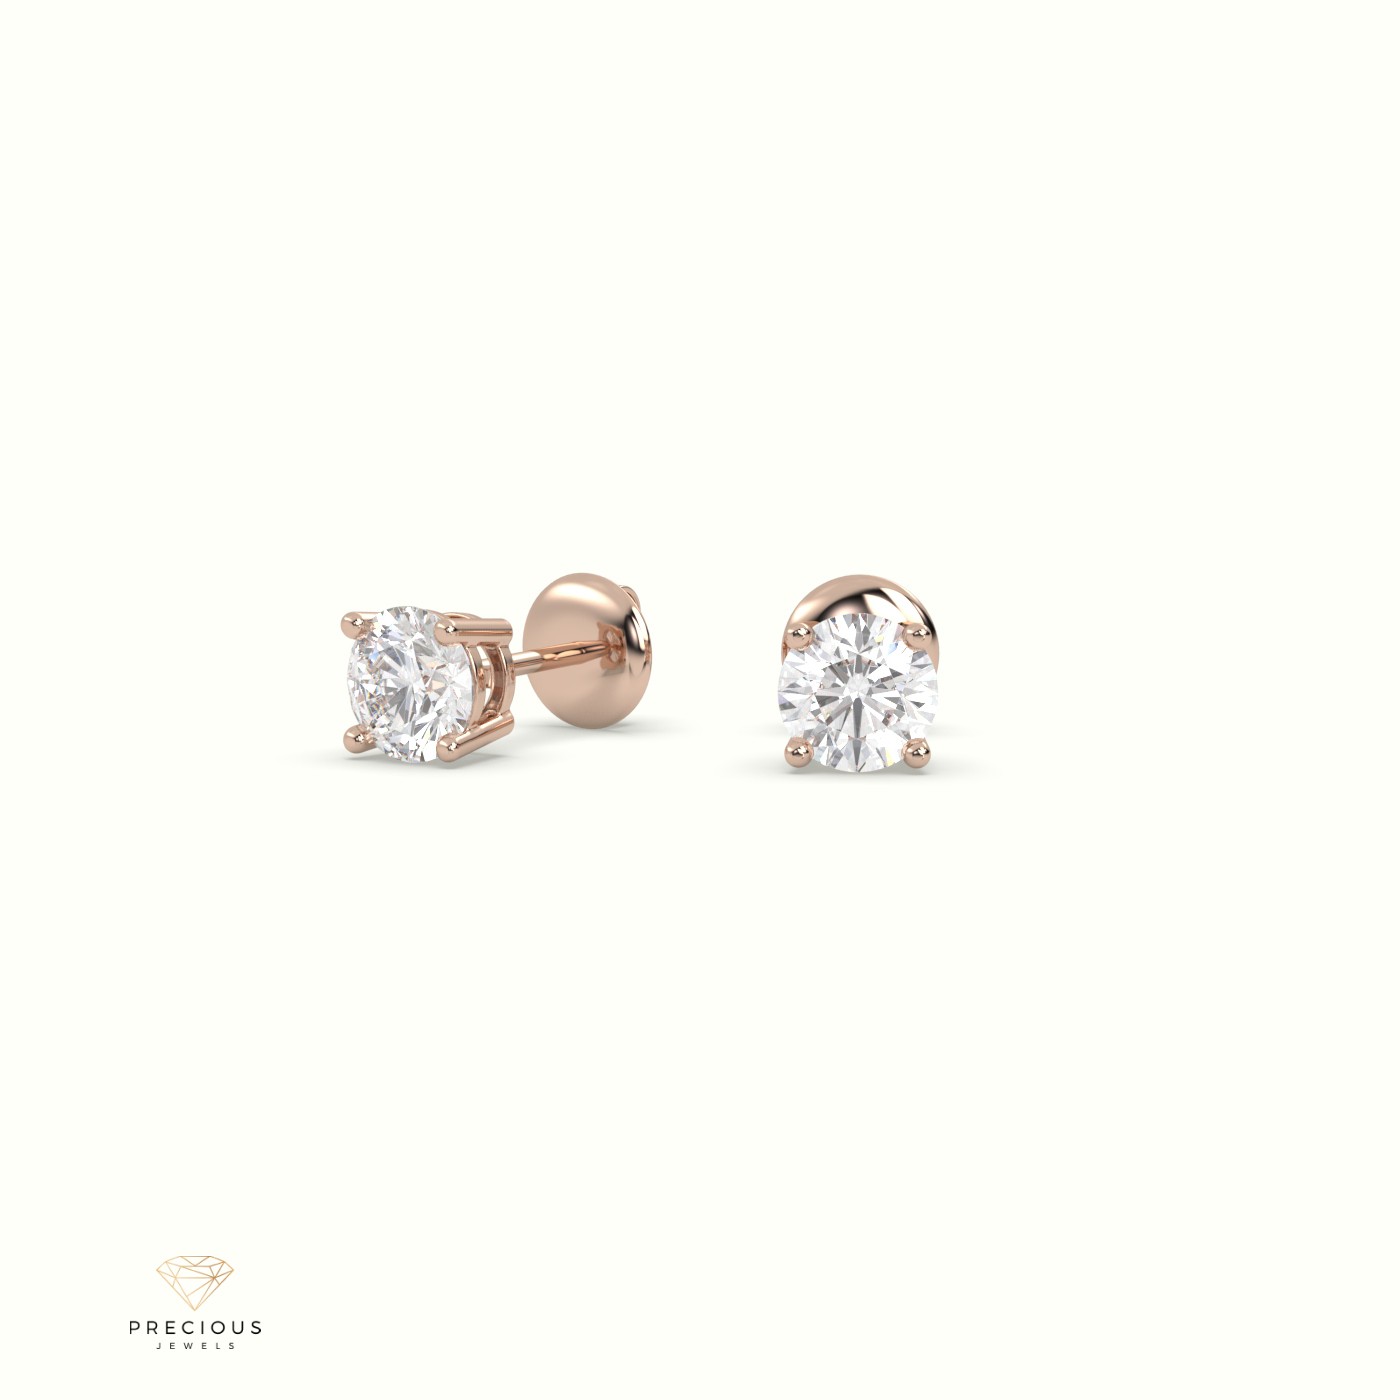 18k rose gold  4 prongs classic round diamond earring studs